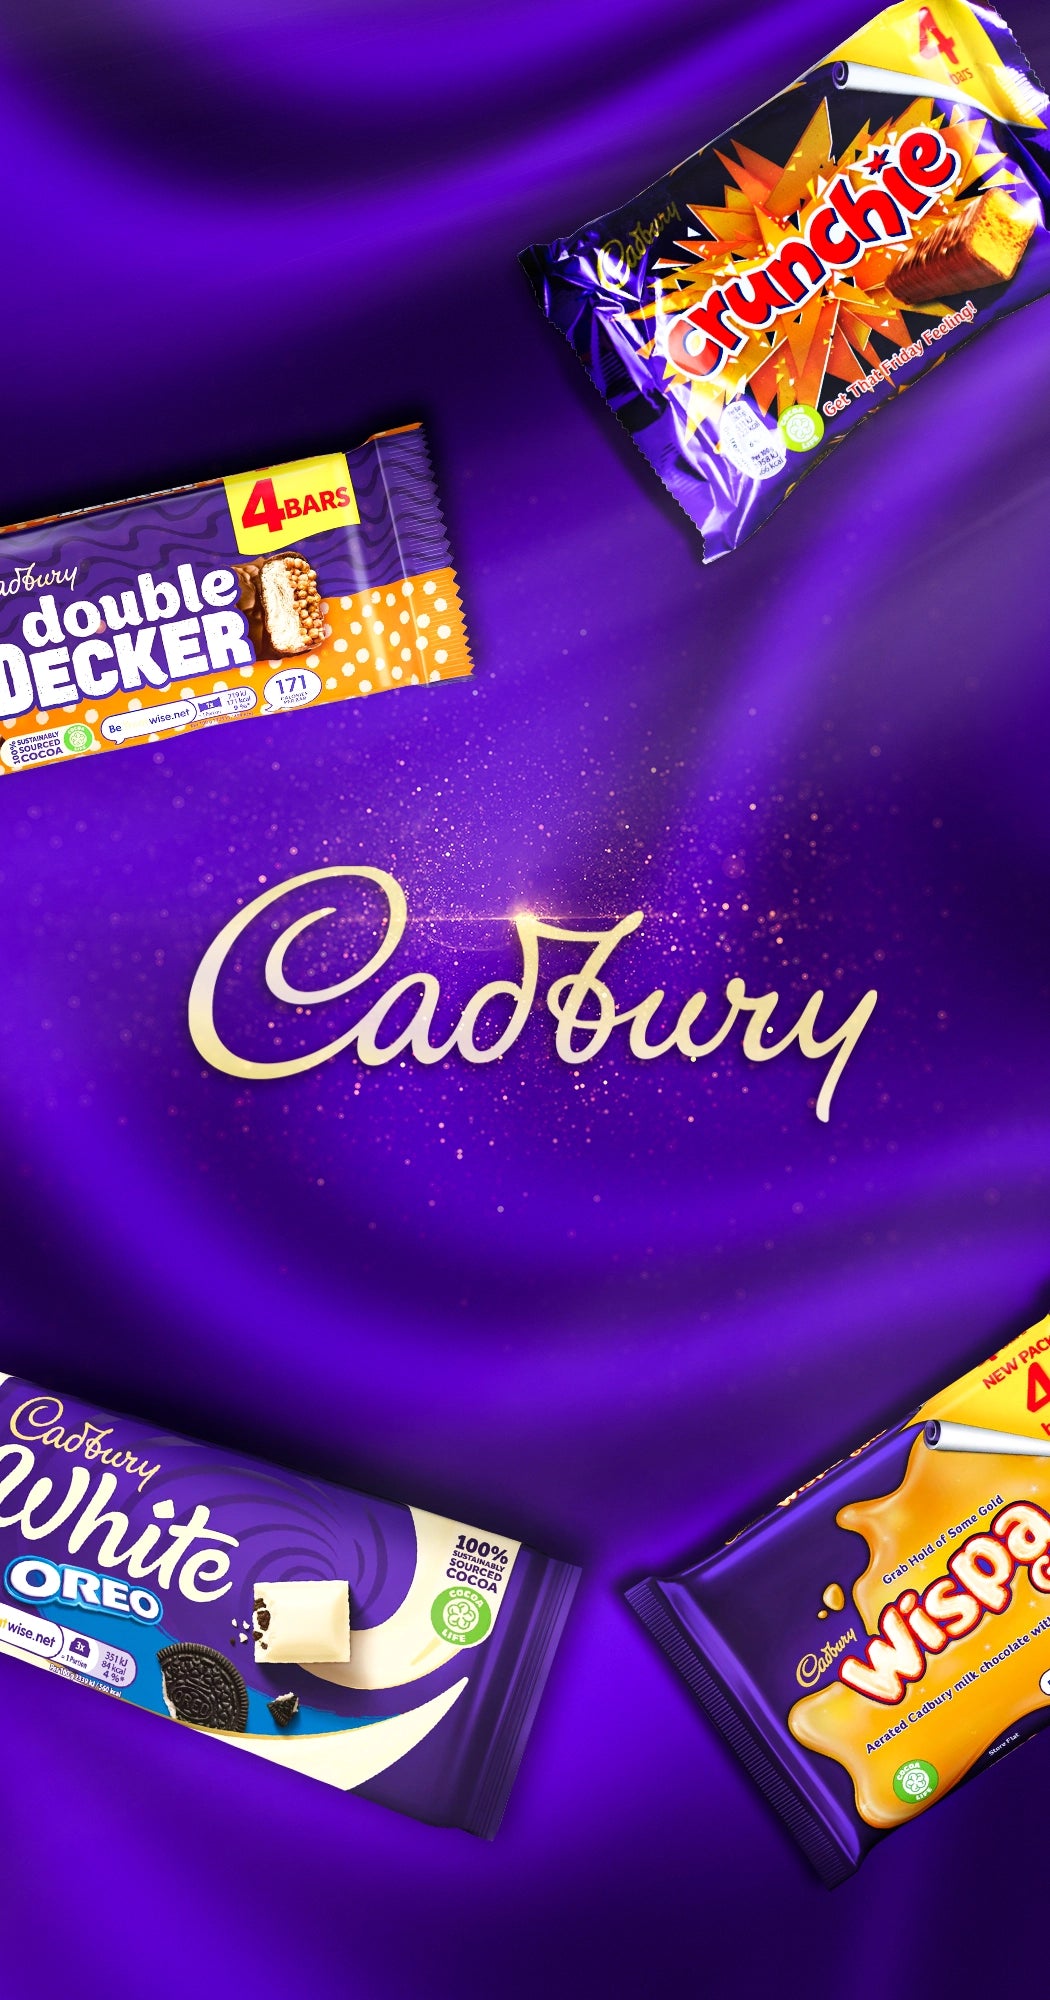 Cadbury collection banner mobile